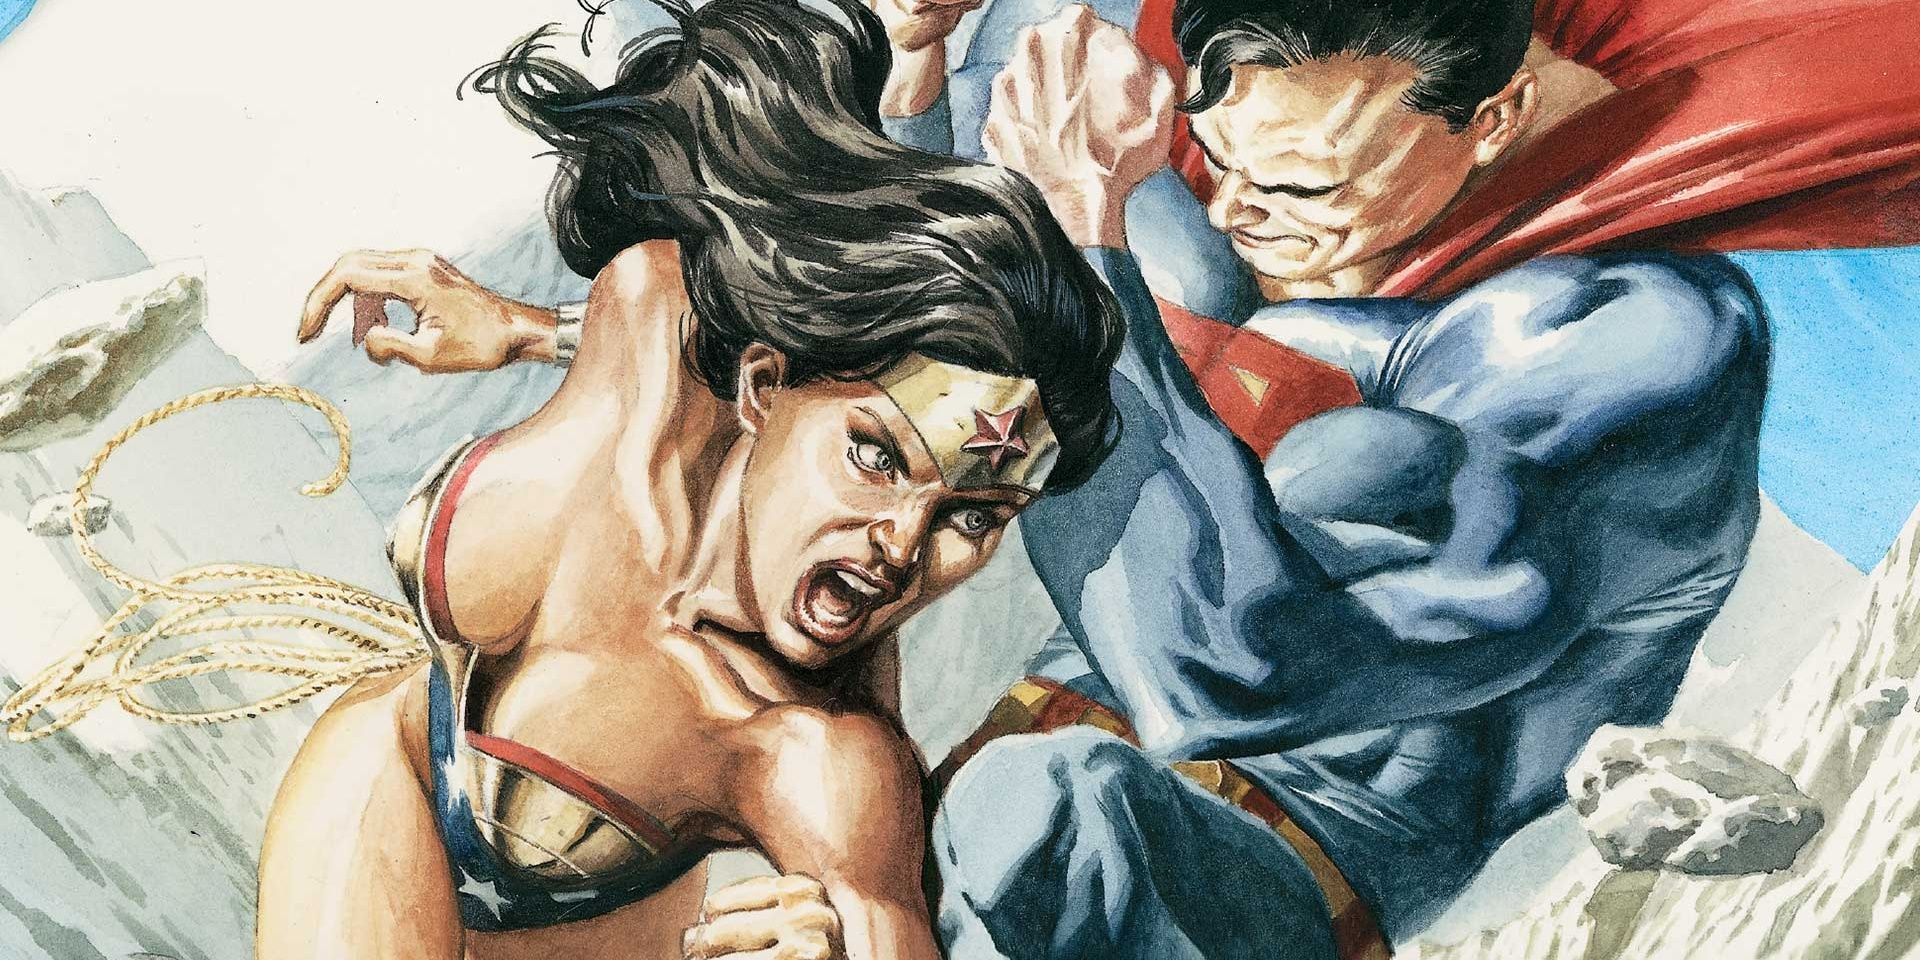 Superman fights Wonder Woman in DC Comics